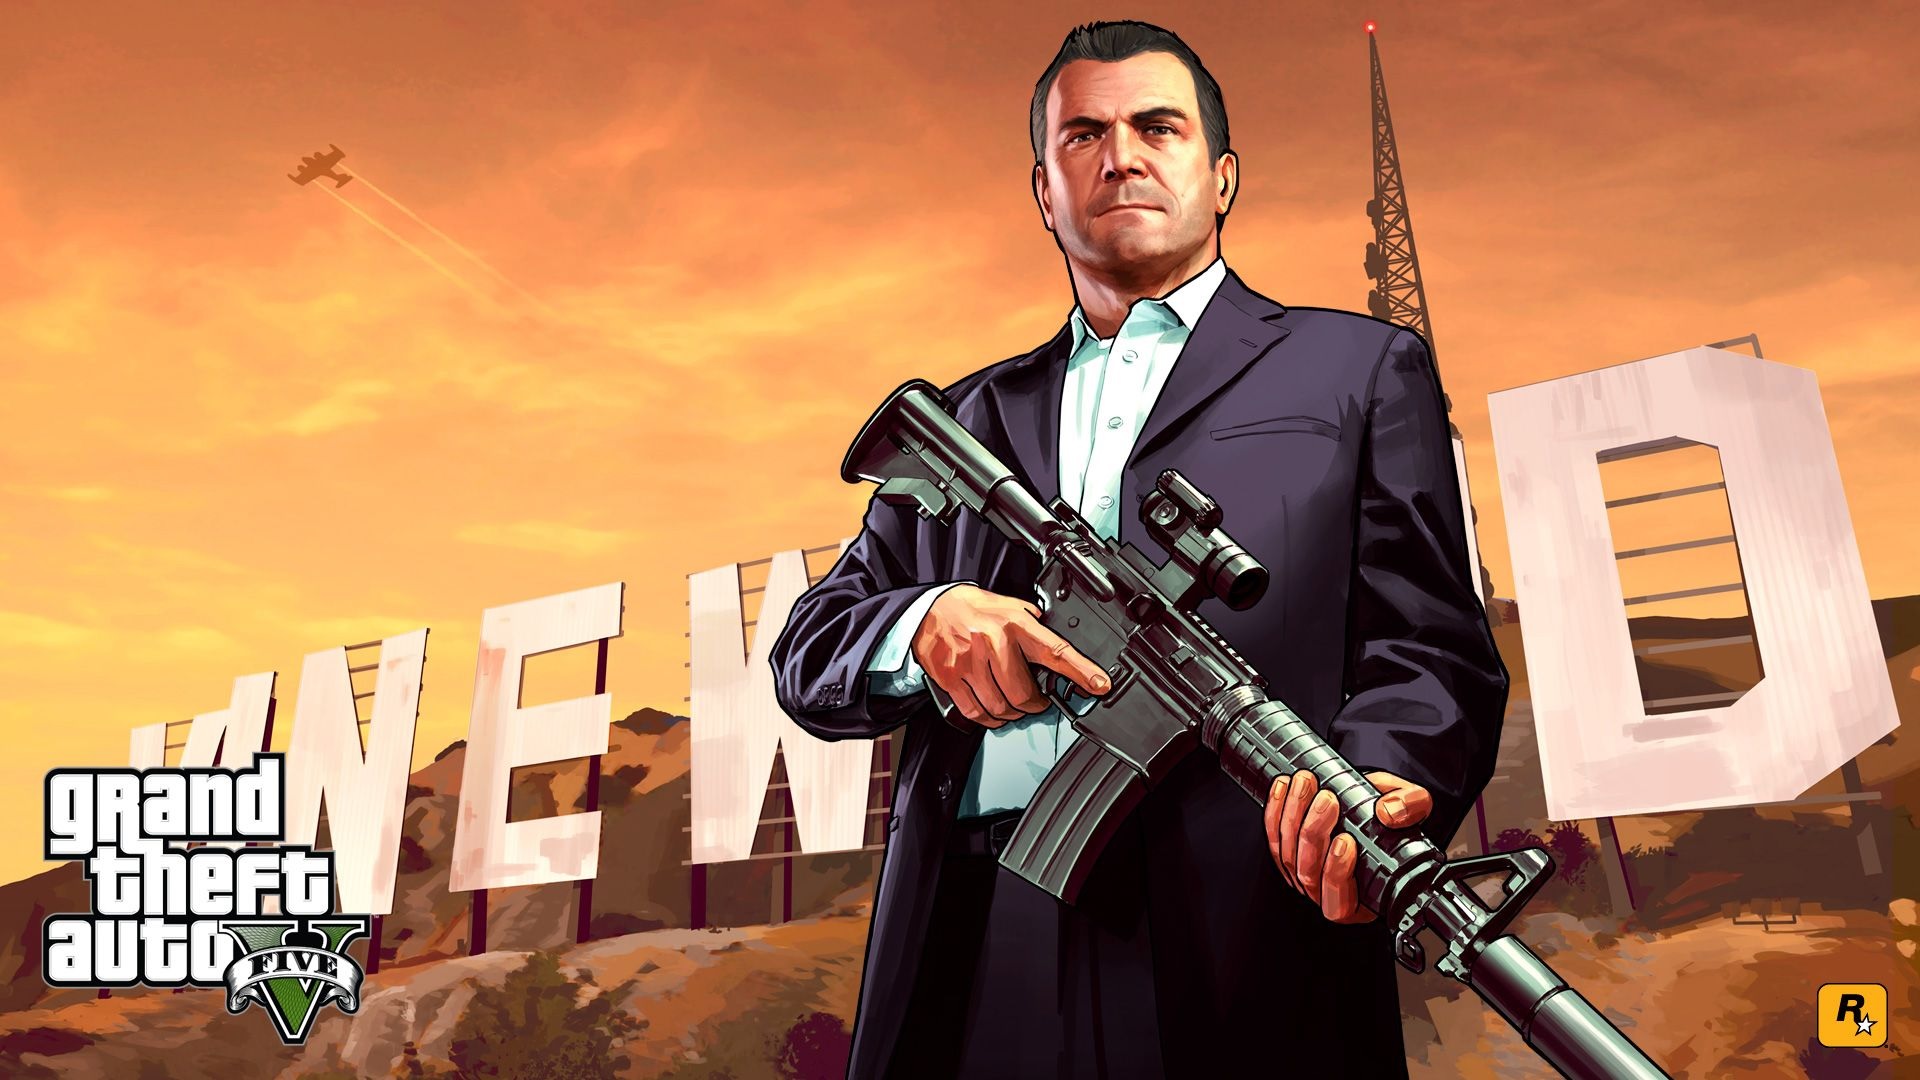  Grand Theft Auto V Xbox One : Take 2 Interactive: Video Games